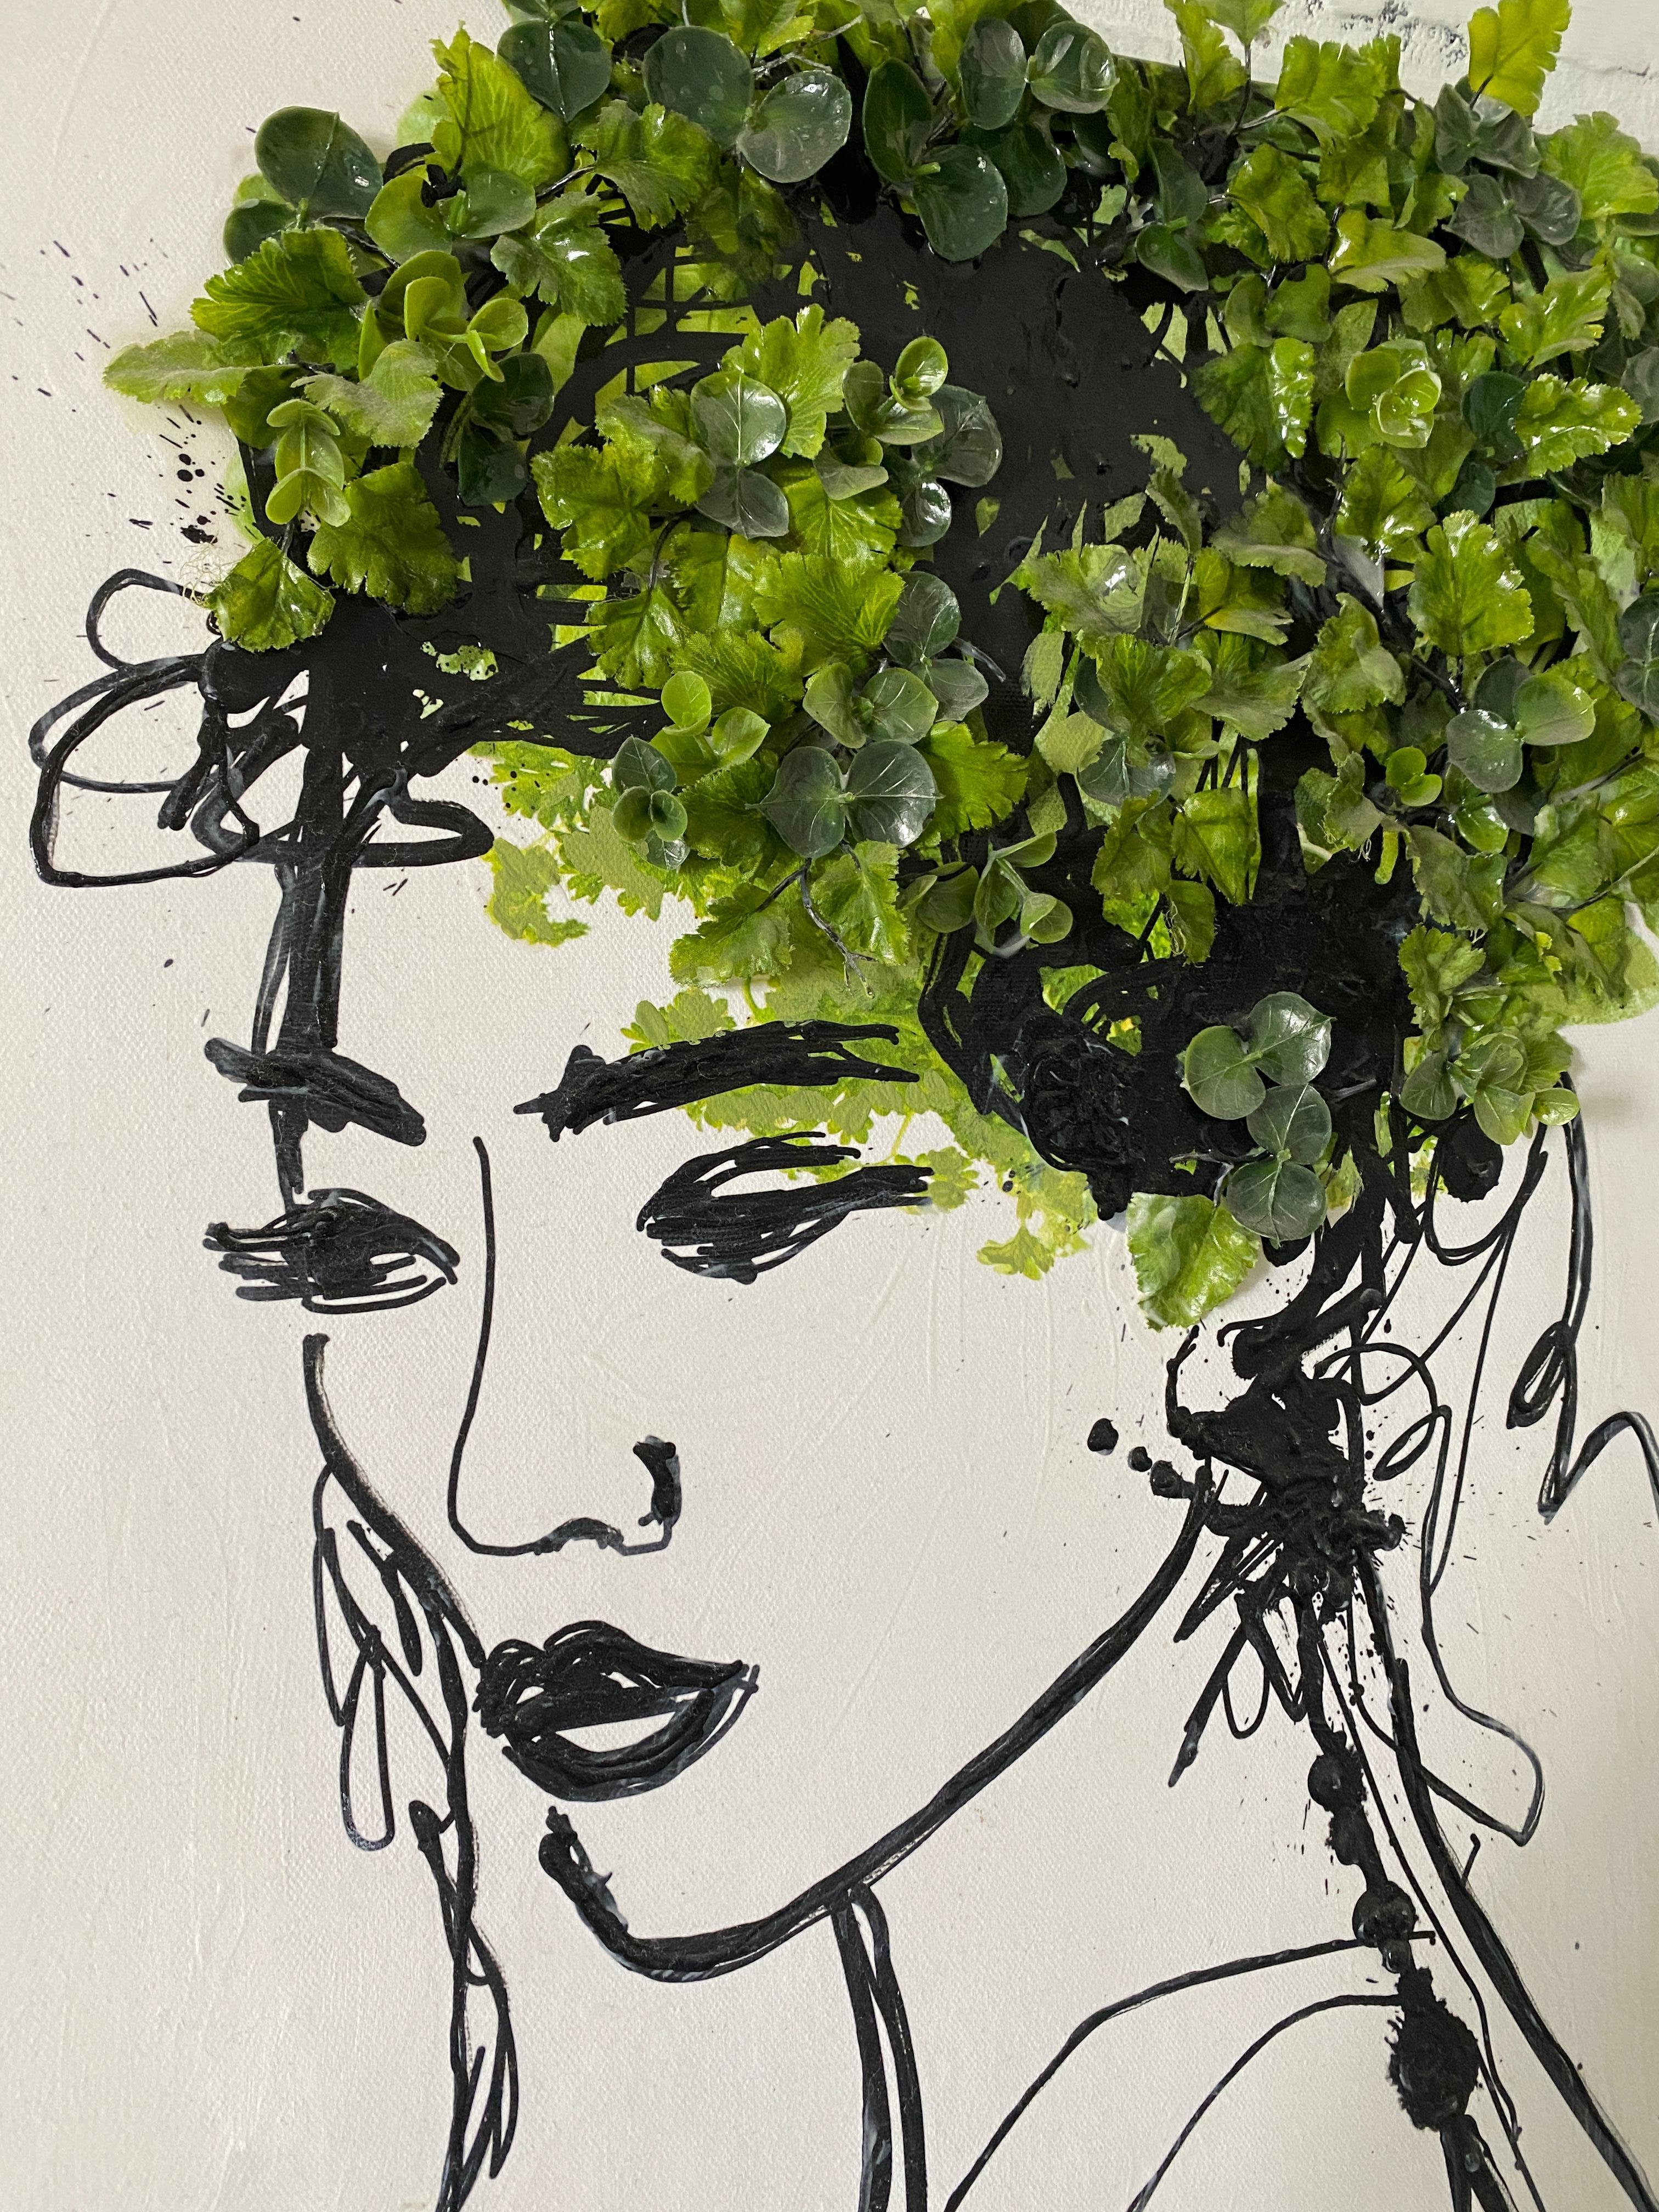 Portrait Spring Woman - Mixed Media on Canvas 3D Design 24x24